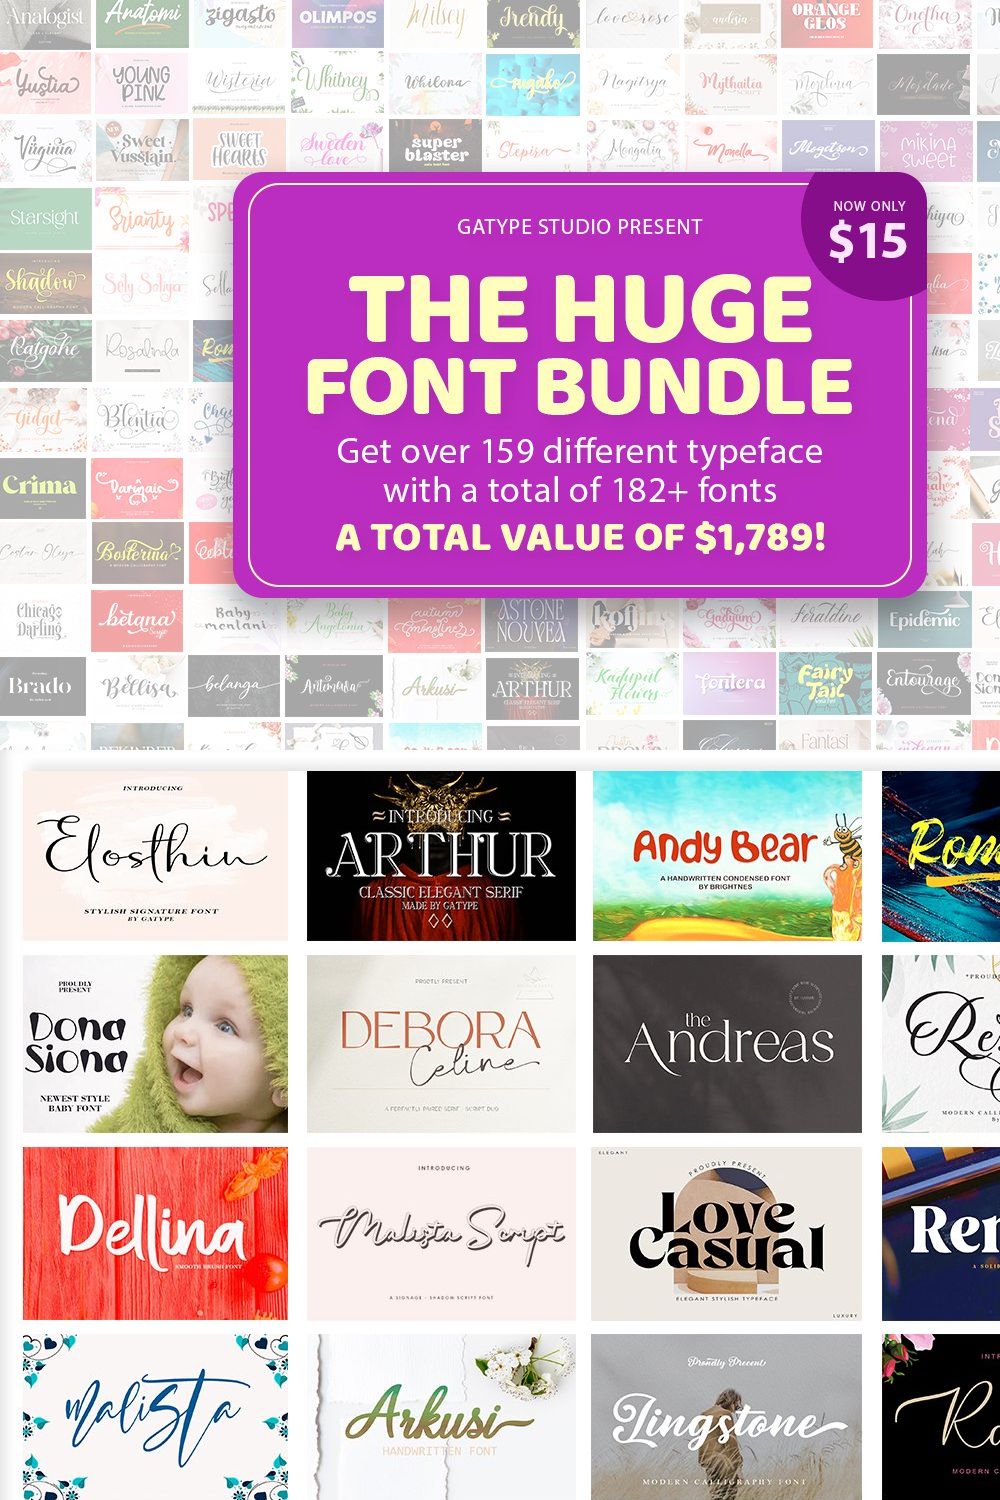 The Huge Font Bundle pinterest preview image.